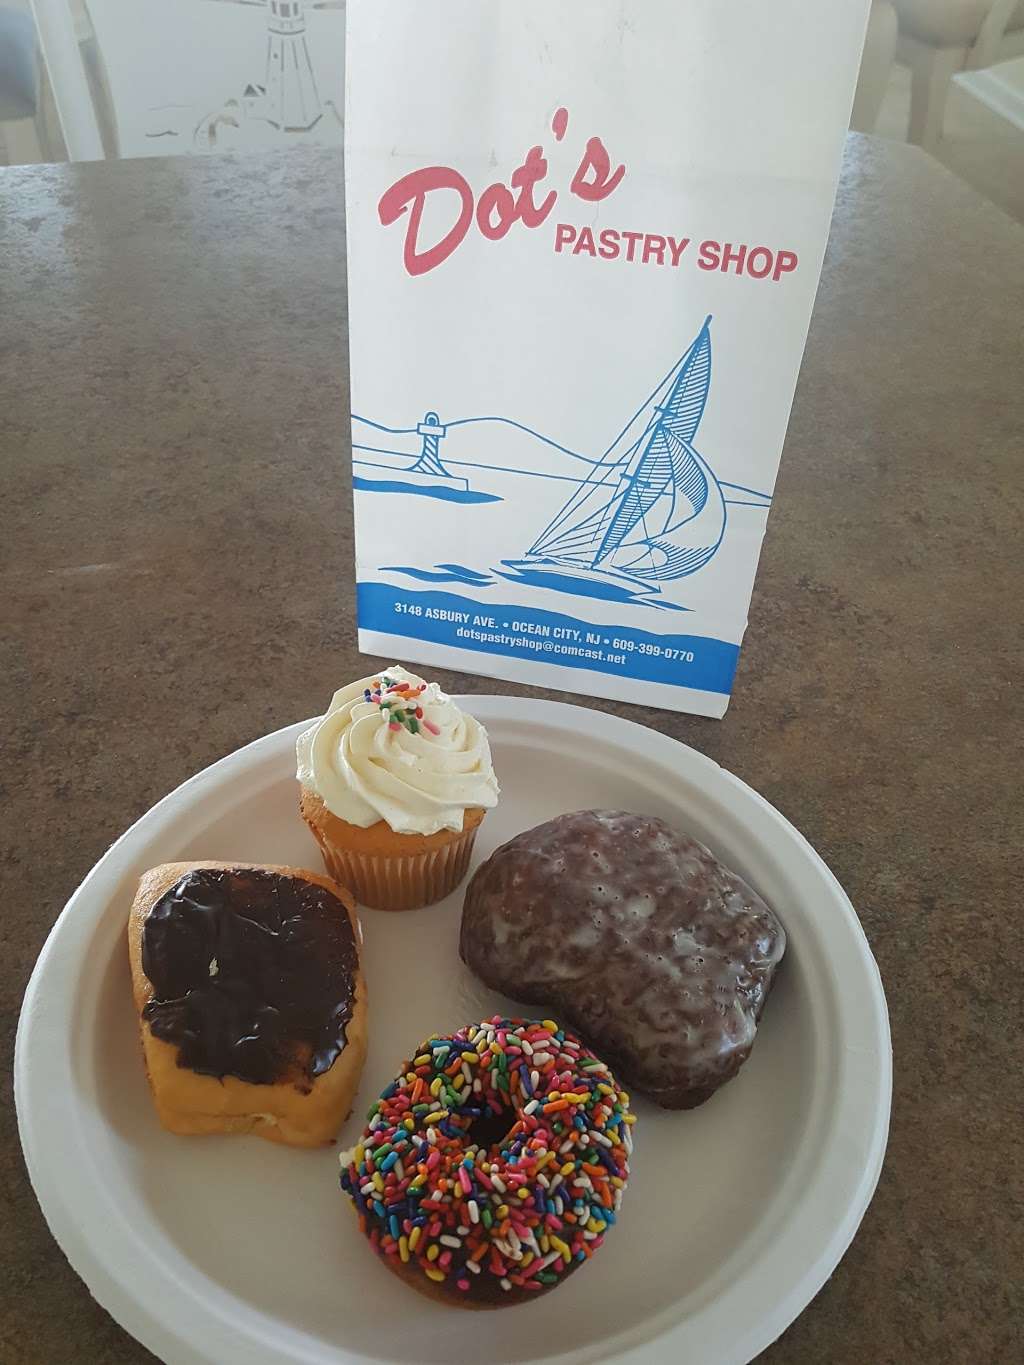 Dots Pastry Shop | 3148 Asbury Ave, Ocean City, NJ 08226 | Phone: (609) 399-0770